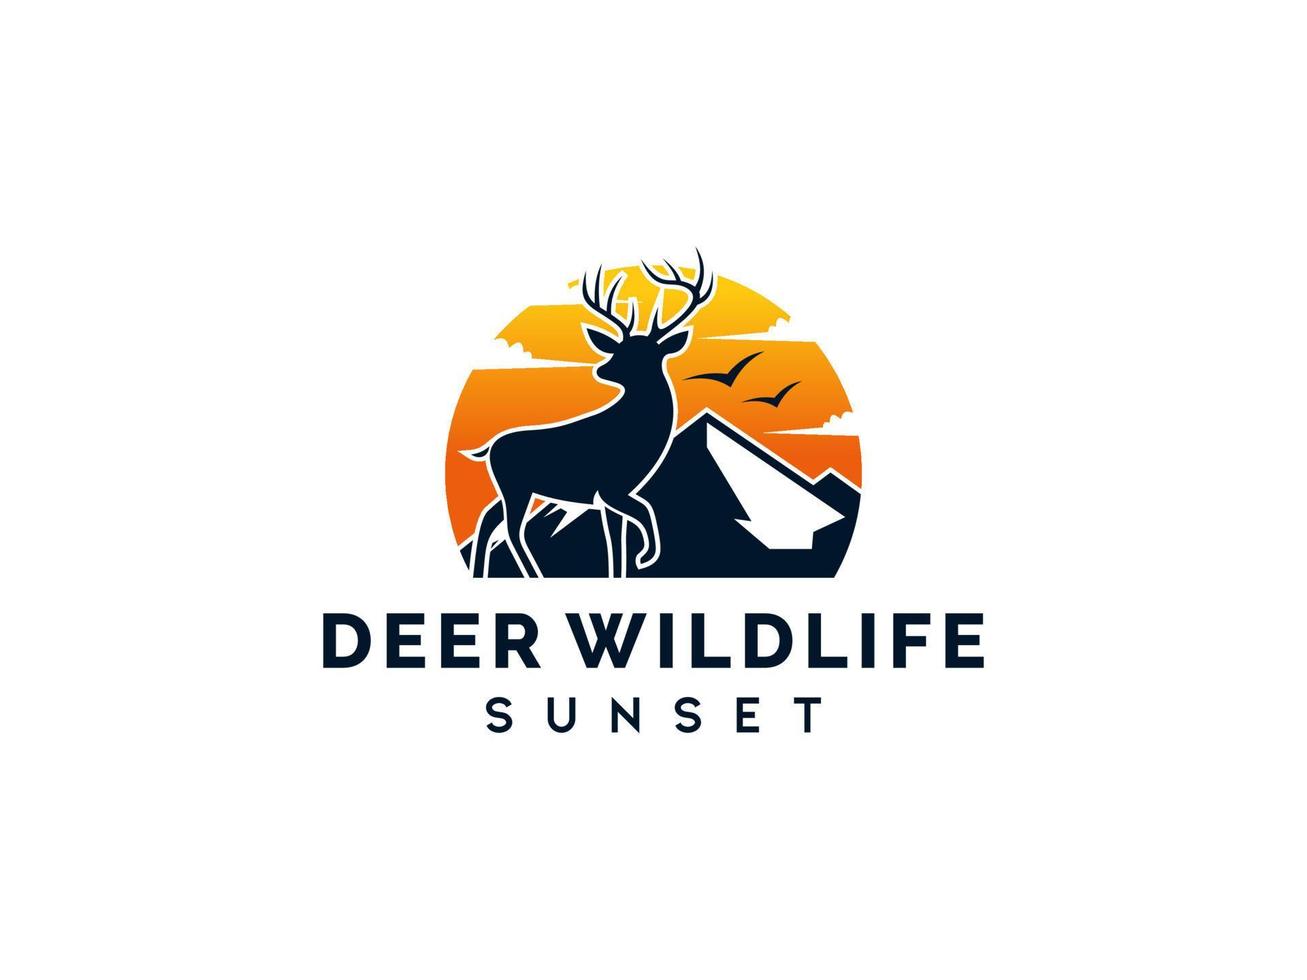 Beauty Deer Buck Stag Silhouette Sunset logo design inspiration. Usable for Business and Branding Logos. Flat Vector Logo Design Template Element.